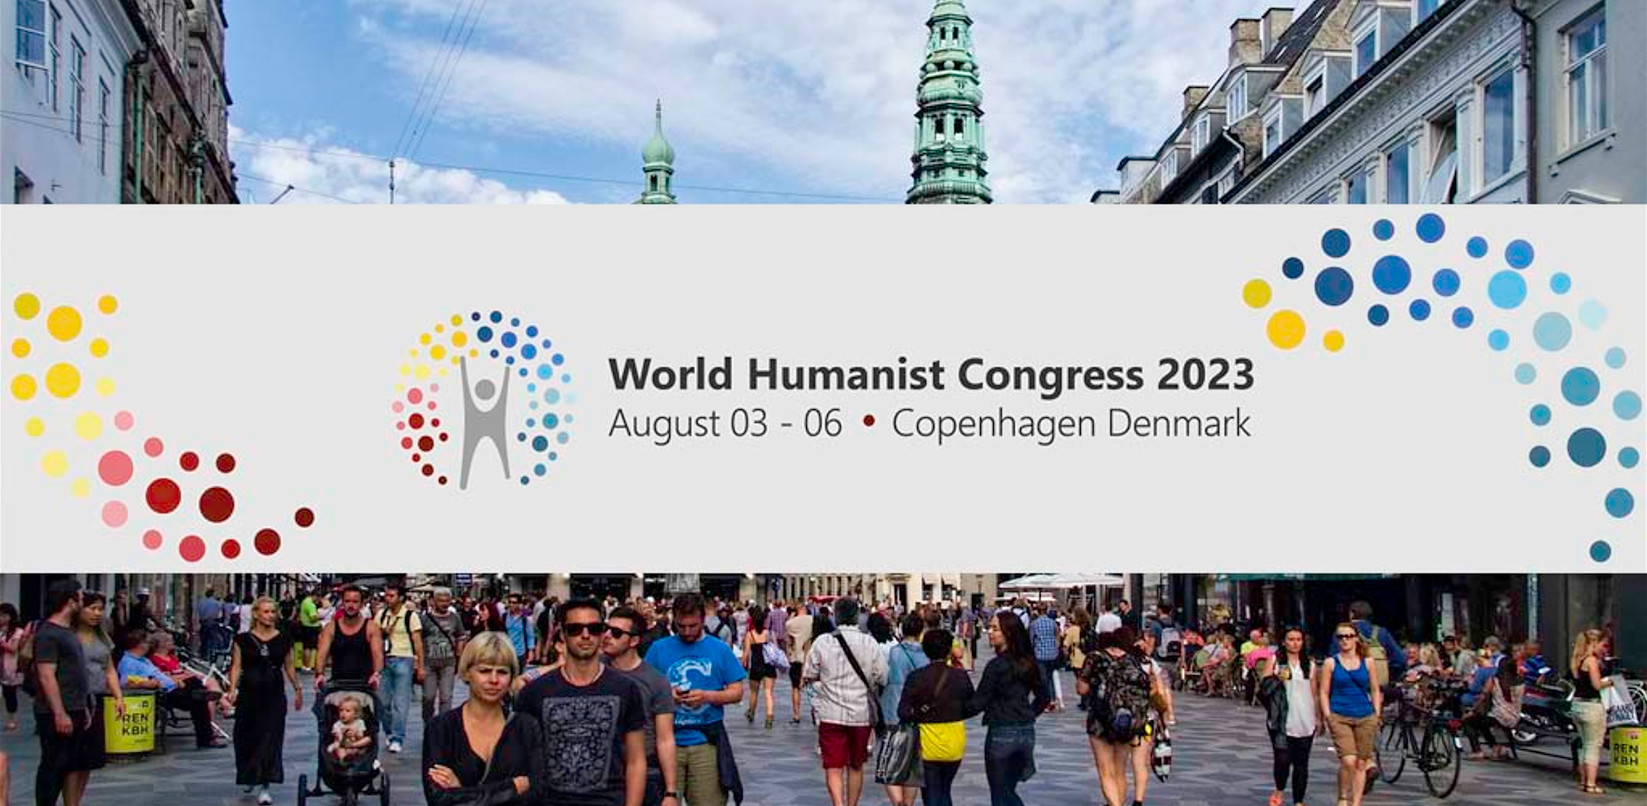 World Humanist Congress banner.